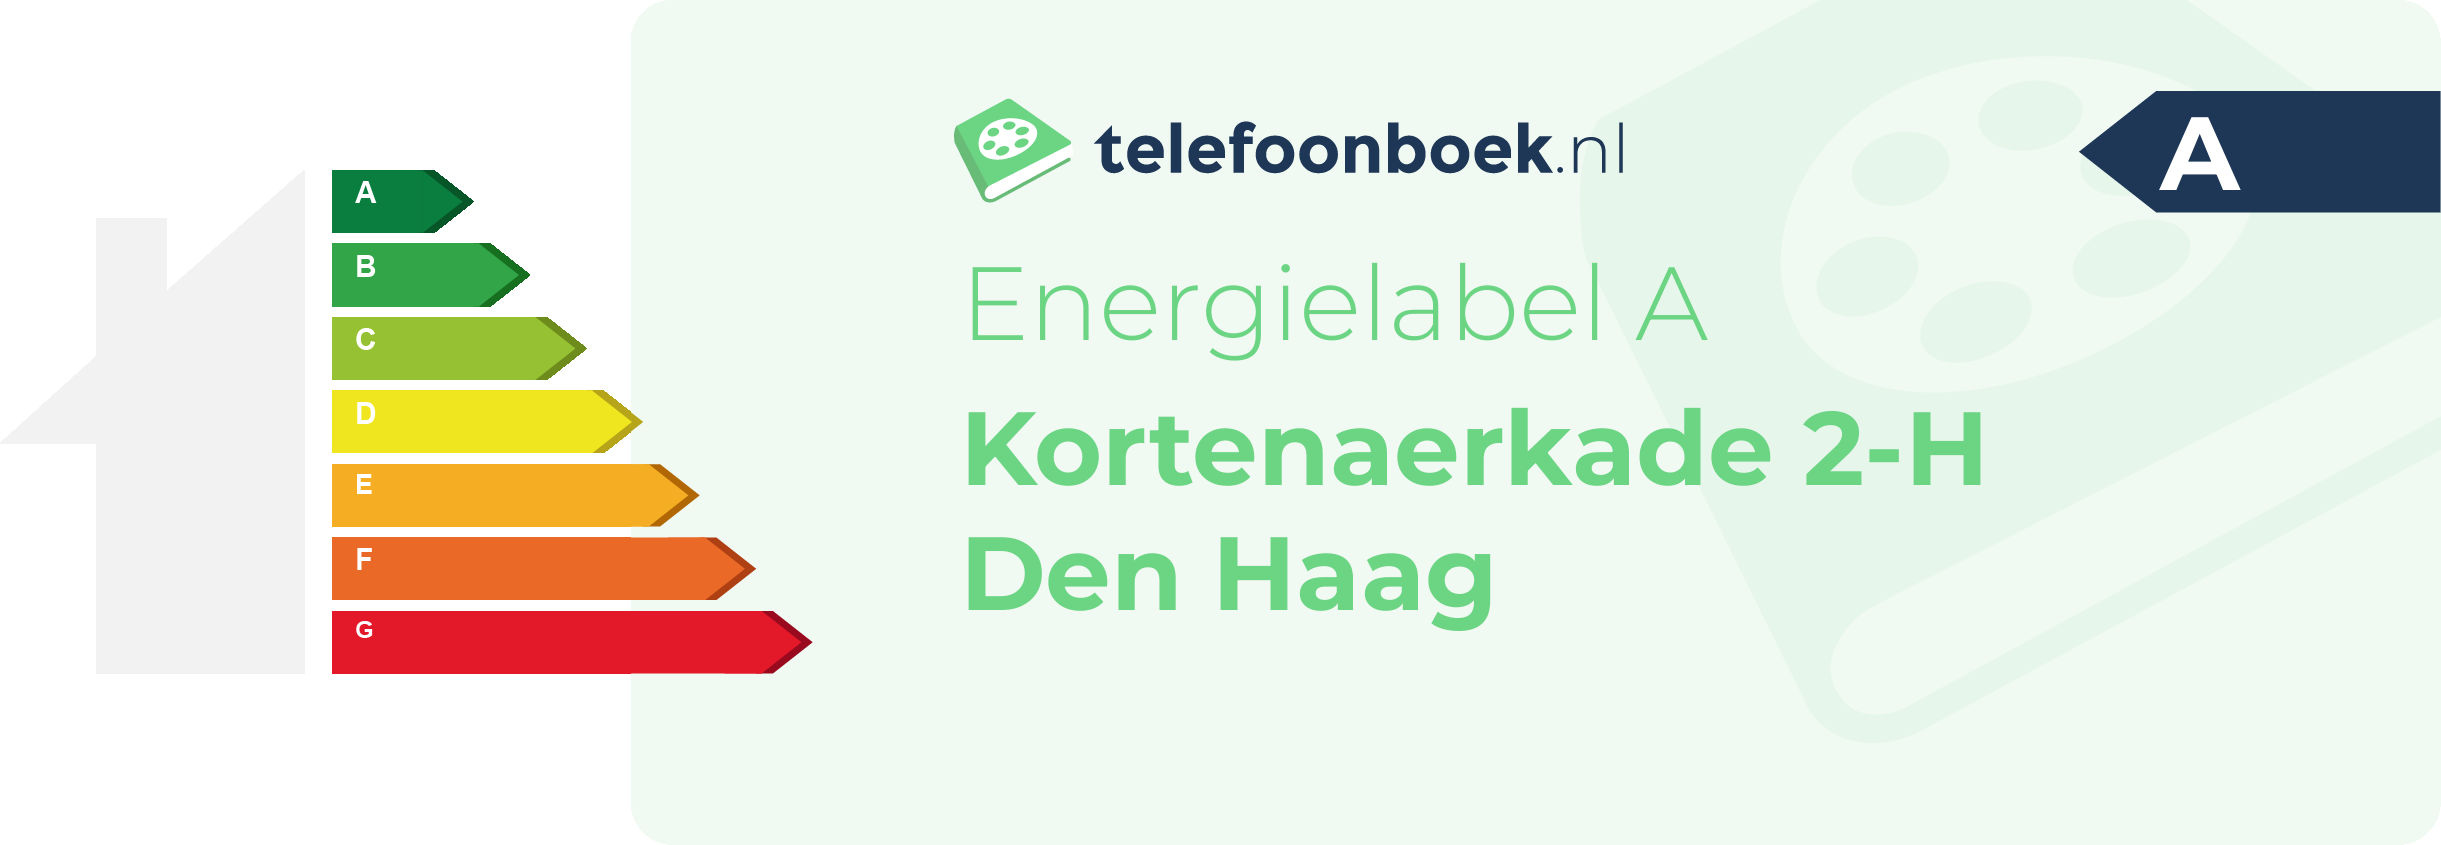 Energielabel Kortenaerkade 2-H Den Haag